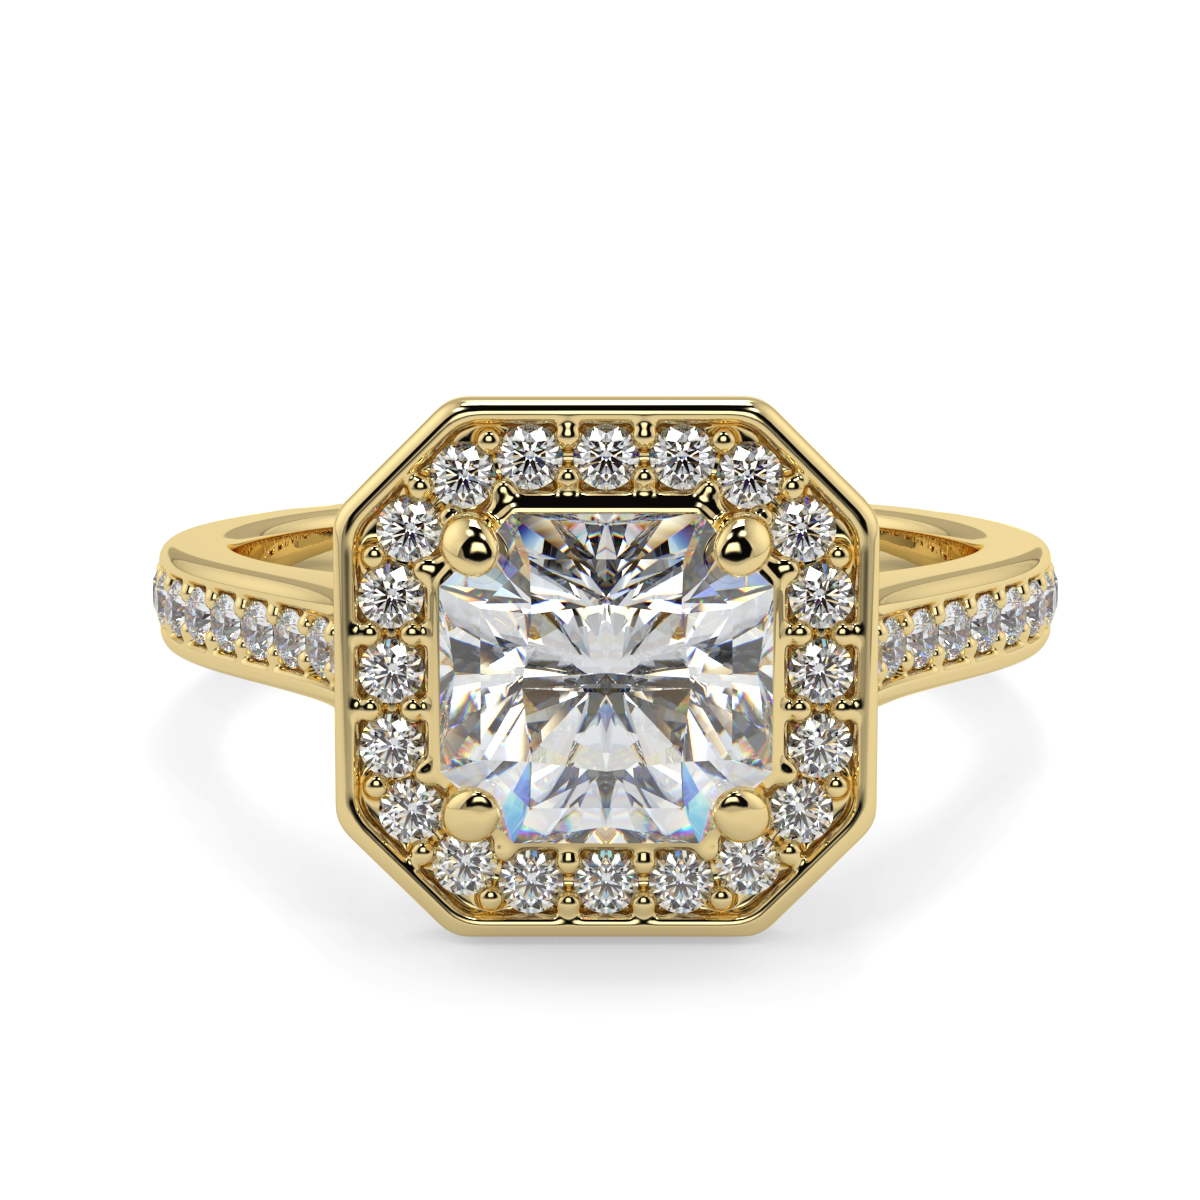 Asher Halo Pave Set Diamond Ring